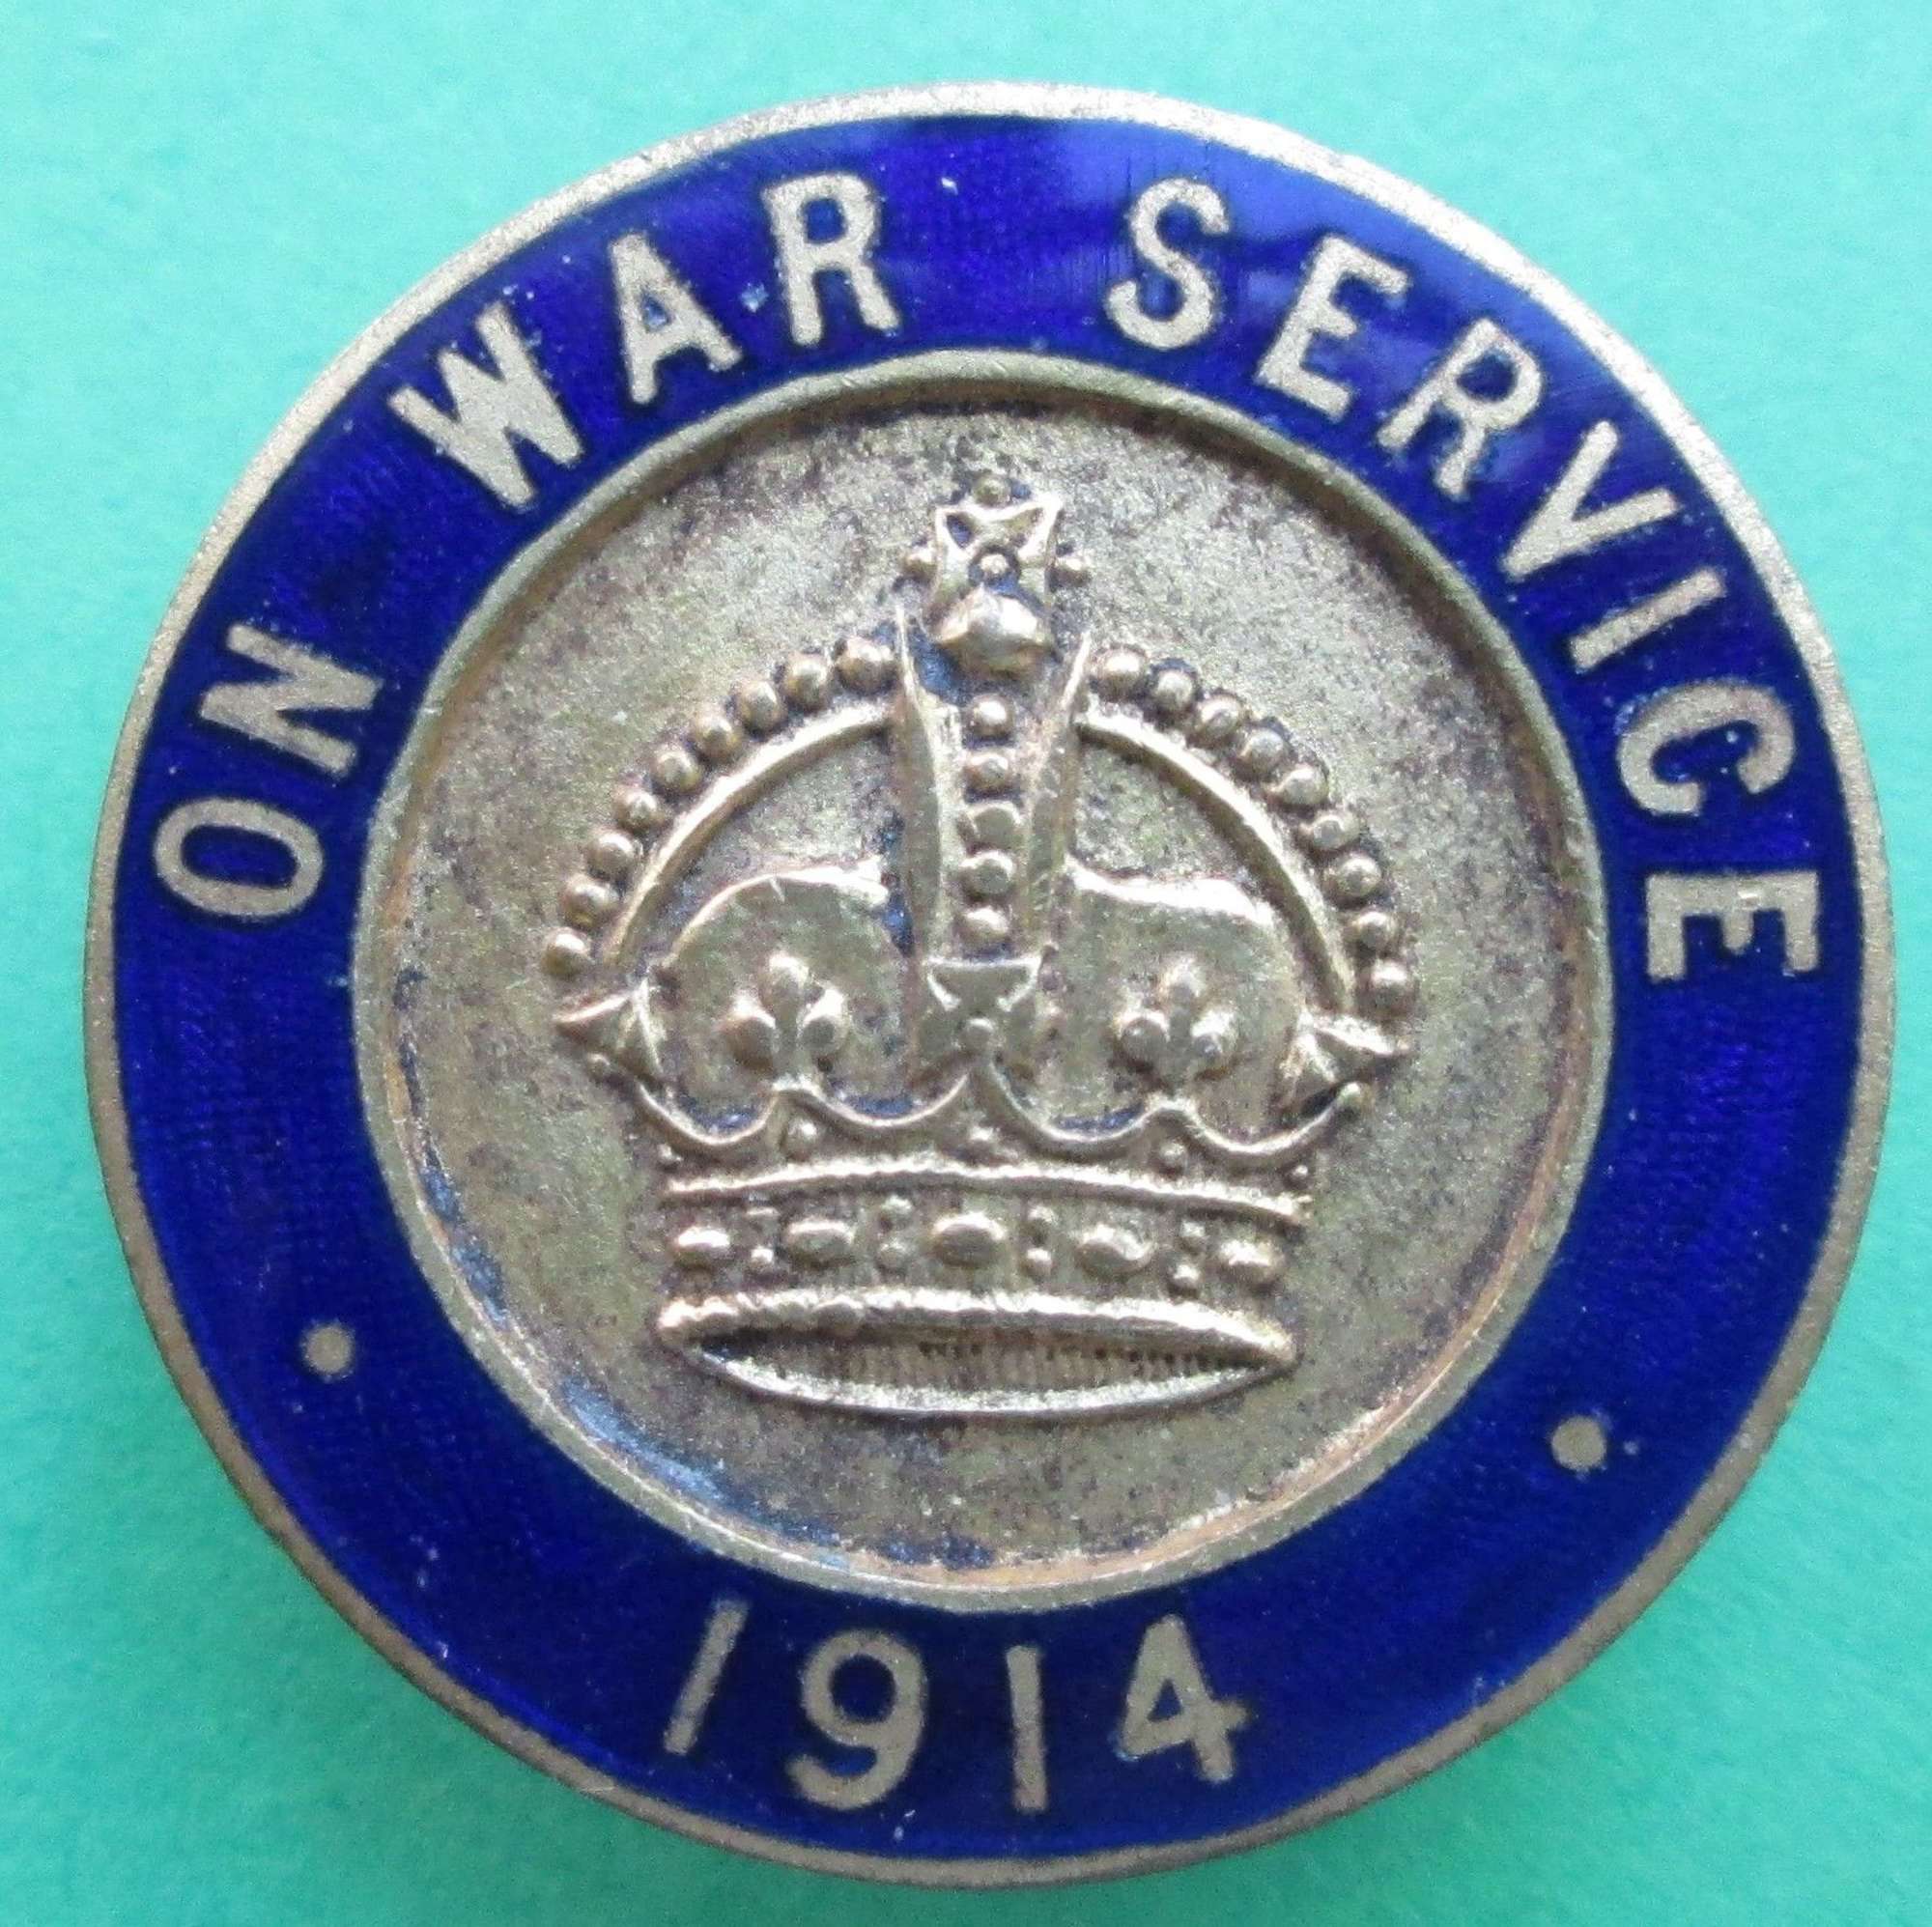 1914 ON WAR SERVICE BADGE